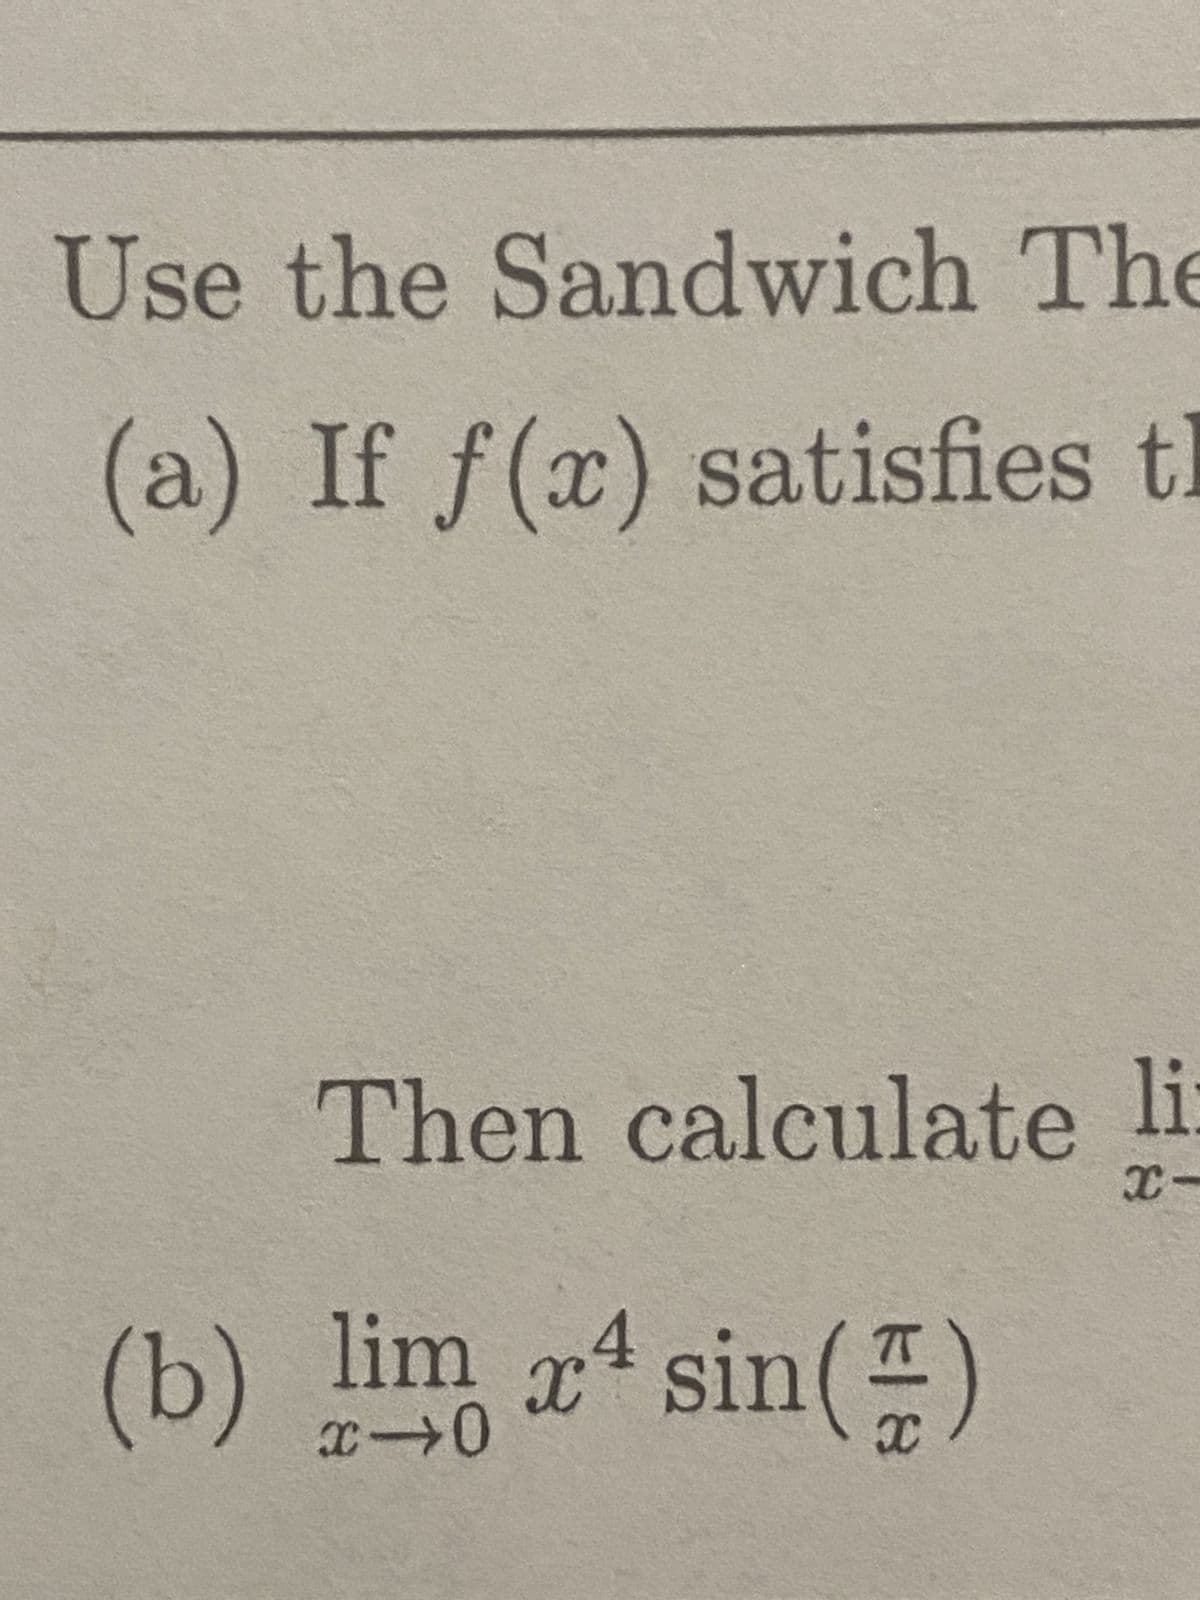 Use the Sandwich The
(a) If f(x) satisfies t
Then calculate li
x-
(b) lim xsin (2)